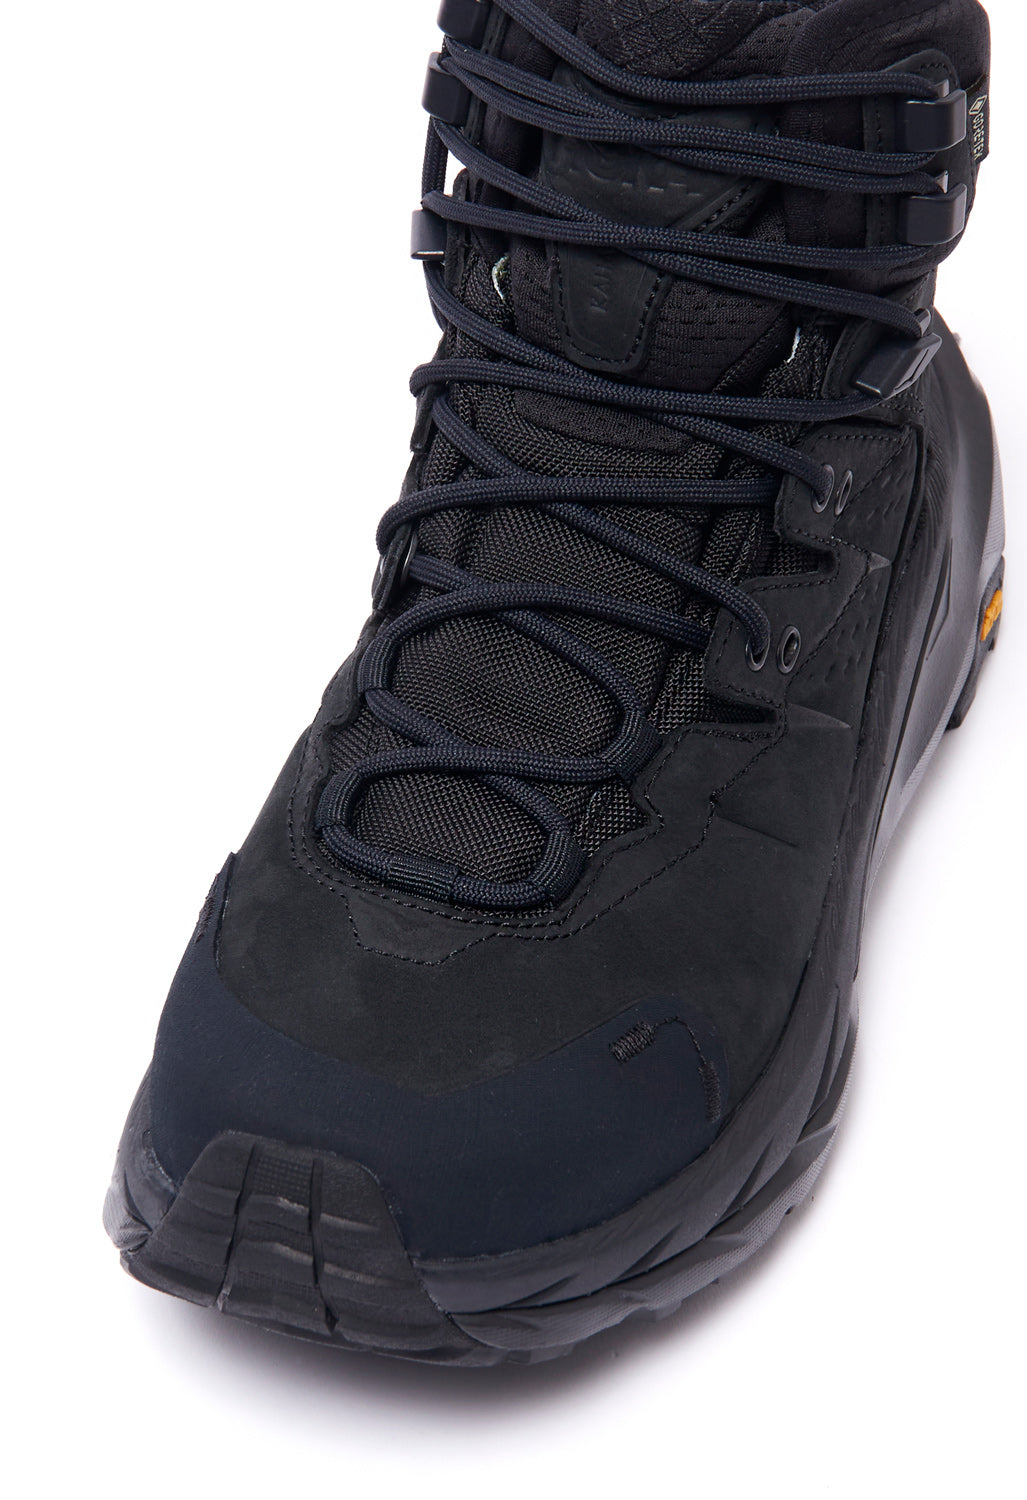 Hoka Kaha 2 GORE-TEX Women's Boots - Black/Black